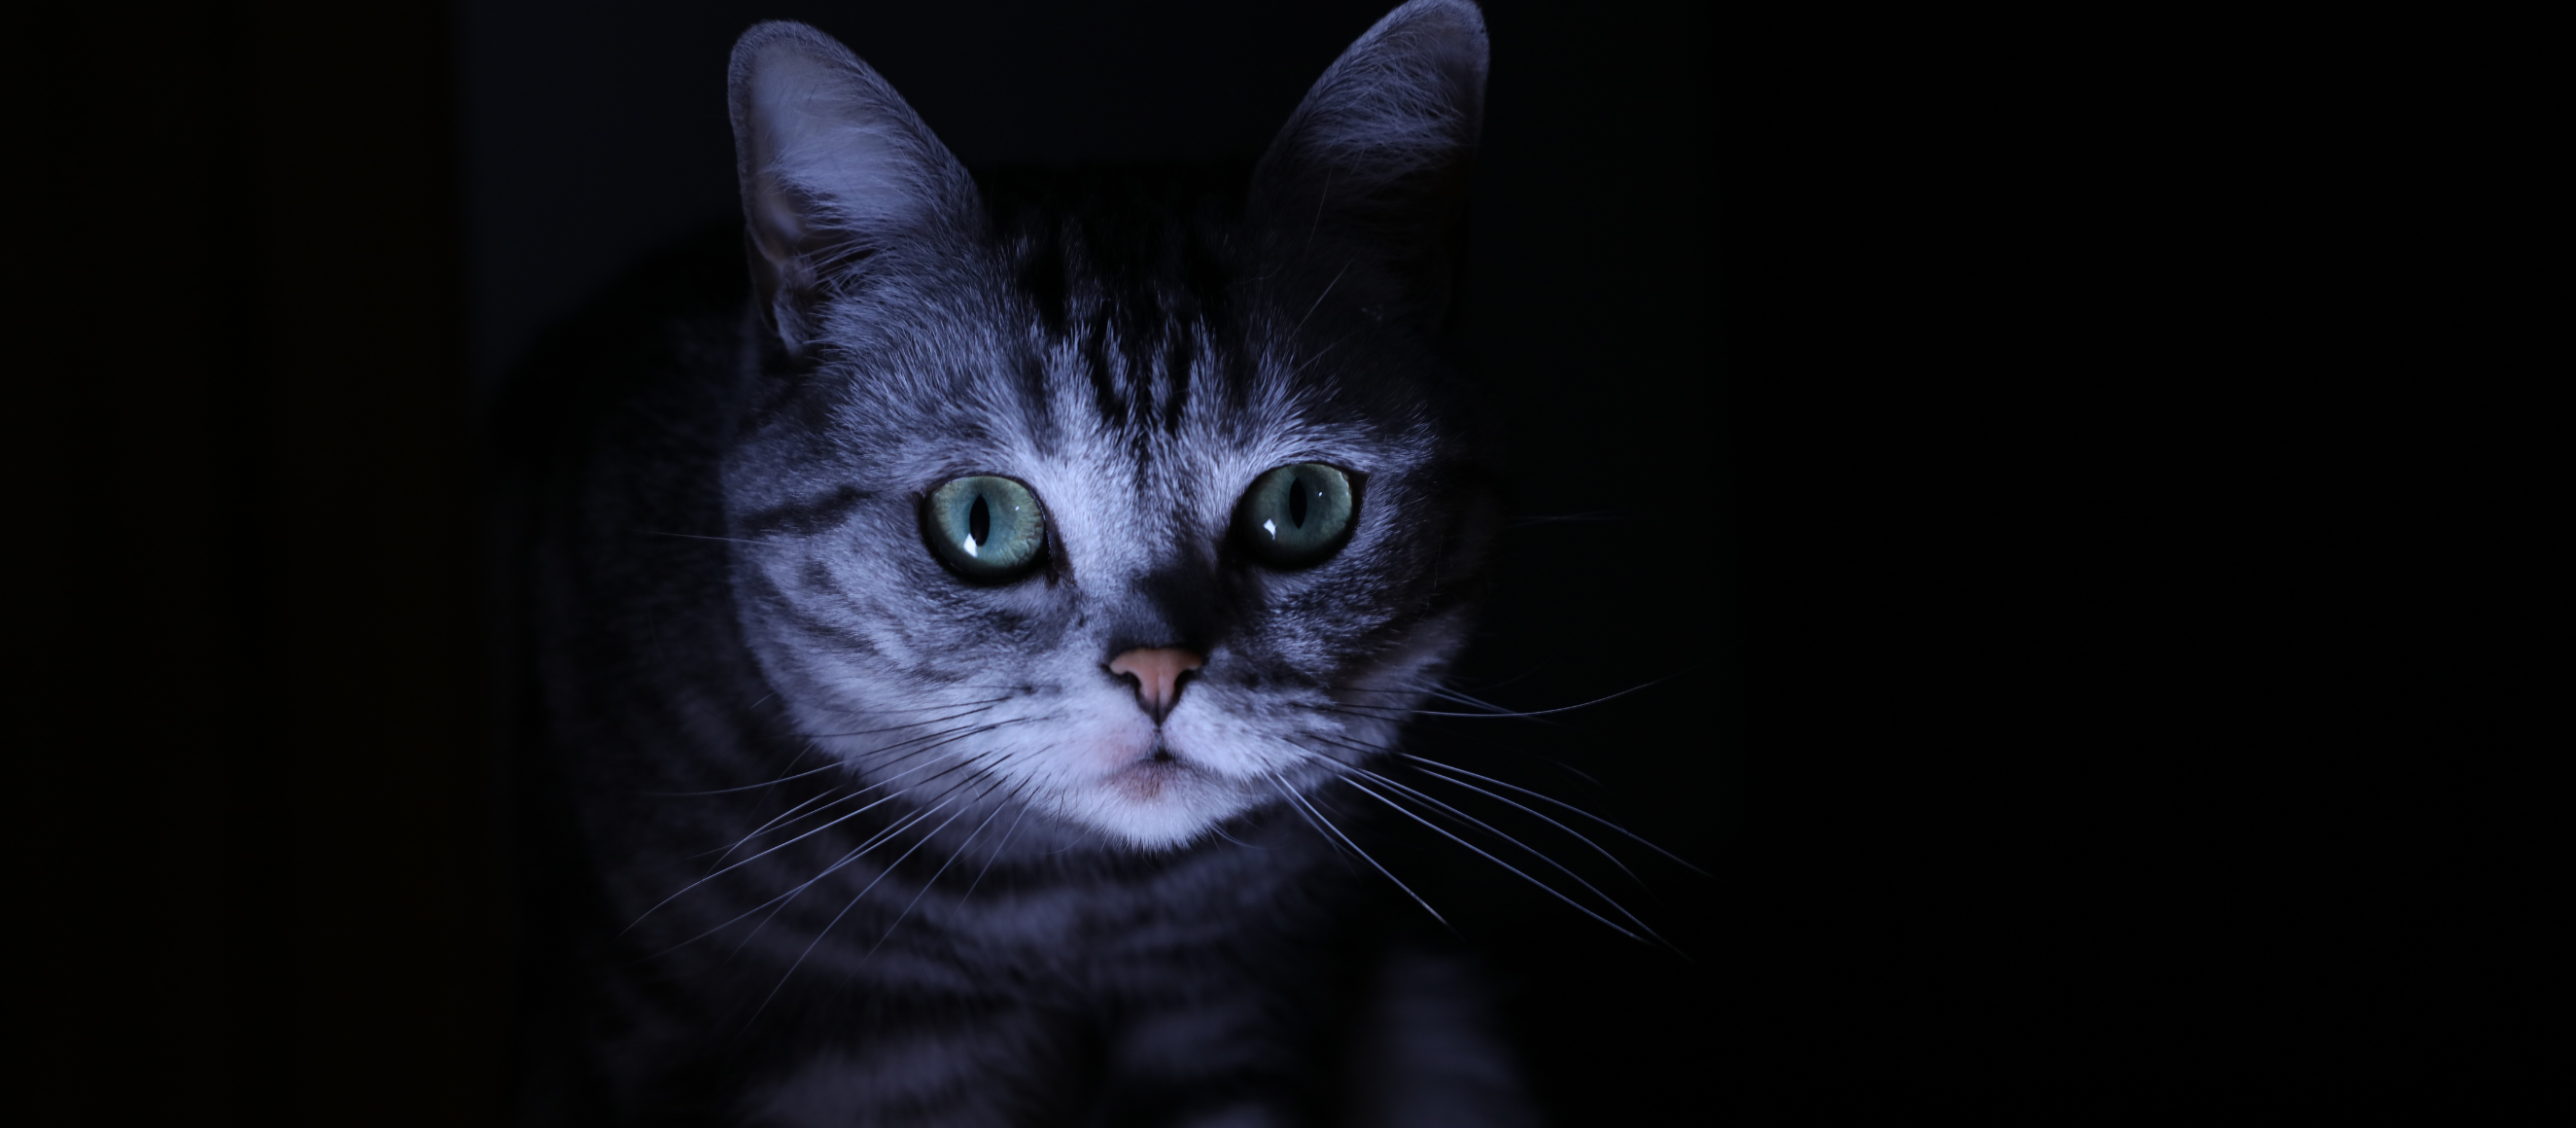 Photo of cat staring creepily in the dark